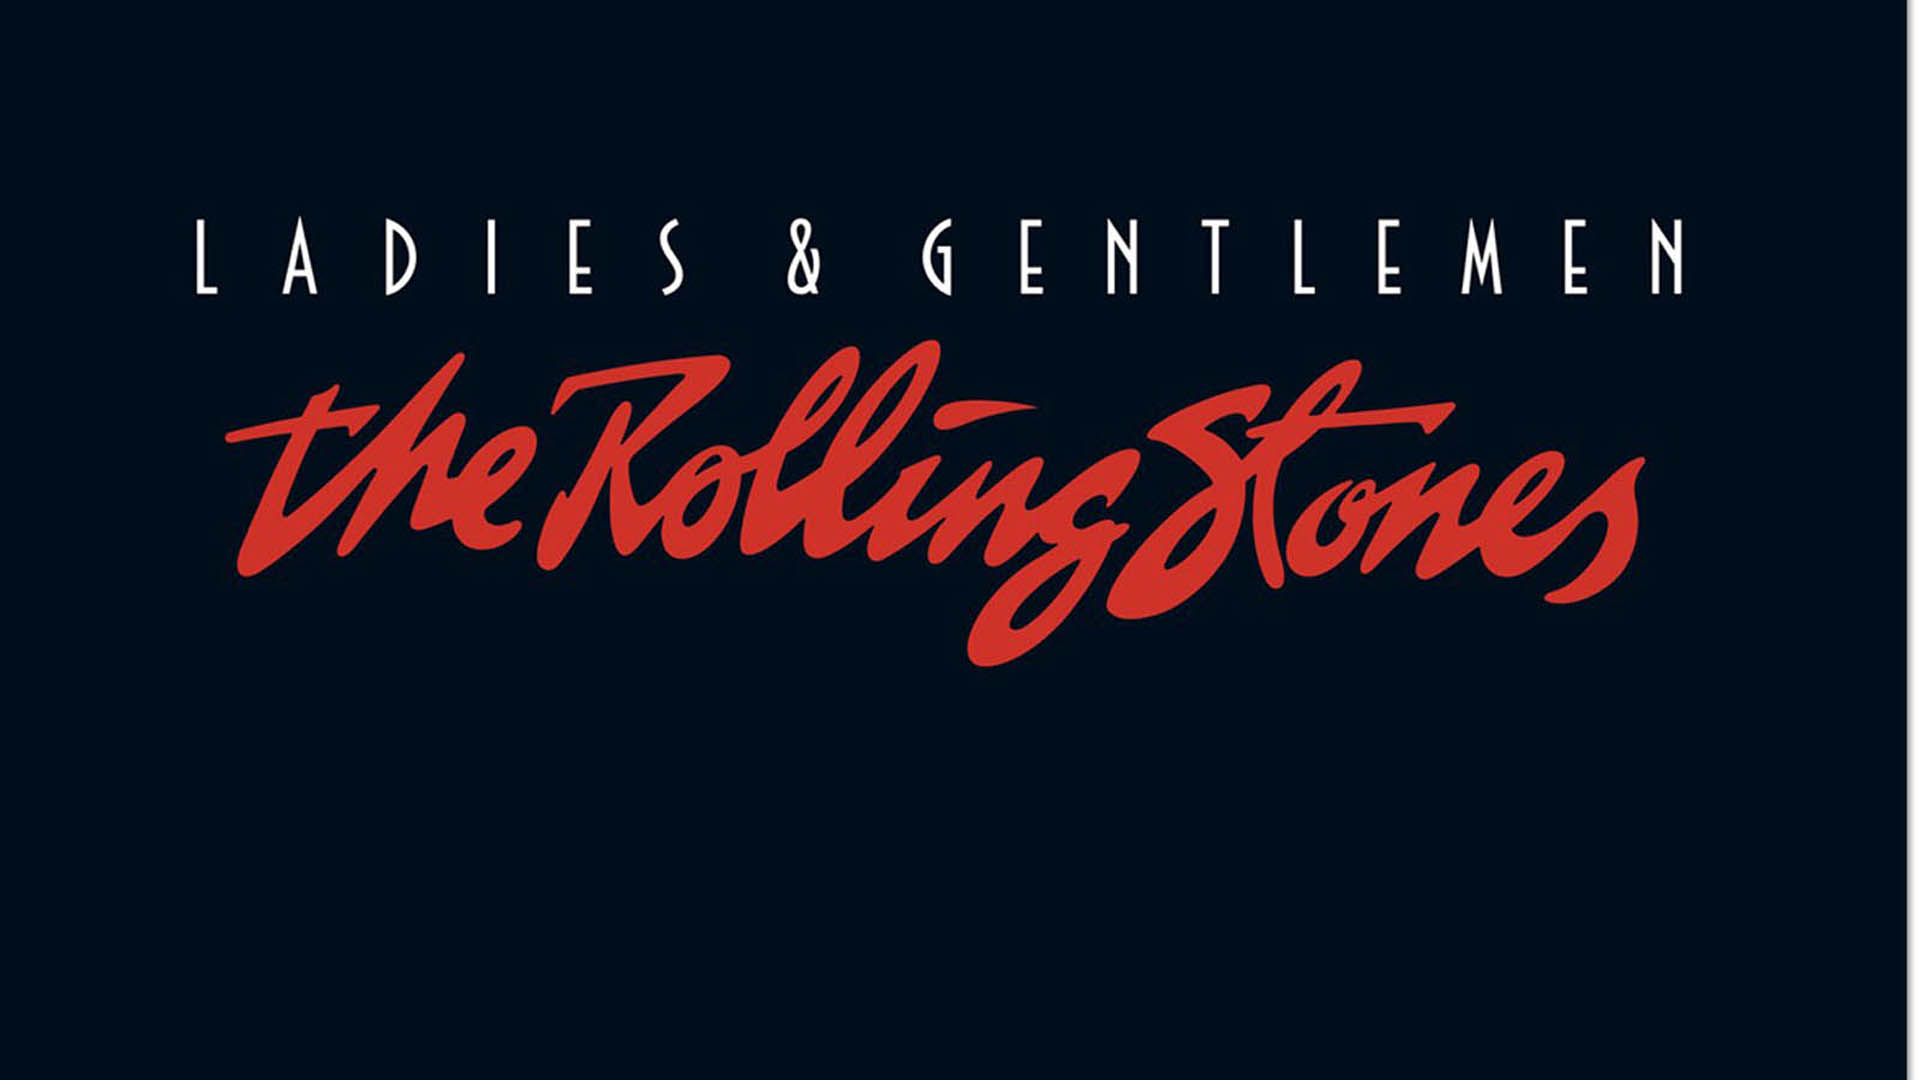 Wallpaper The Rolling Stones Hotsell GET 54 OFF islandcrematoriumie